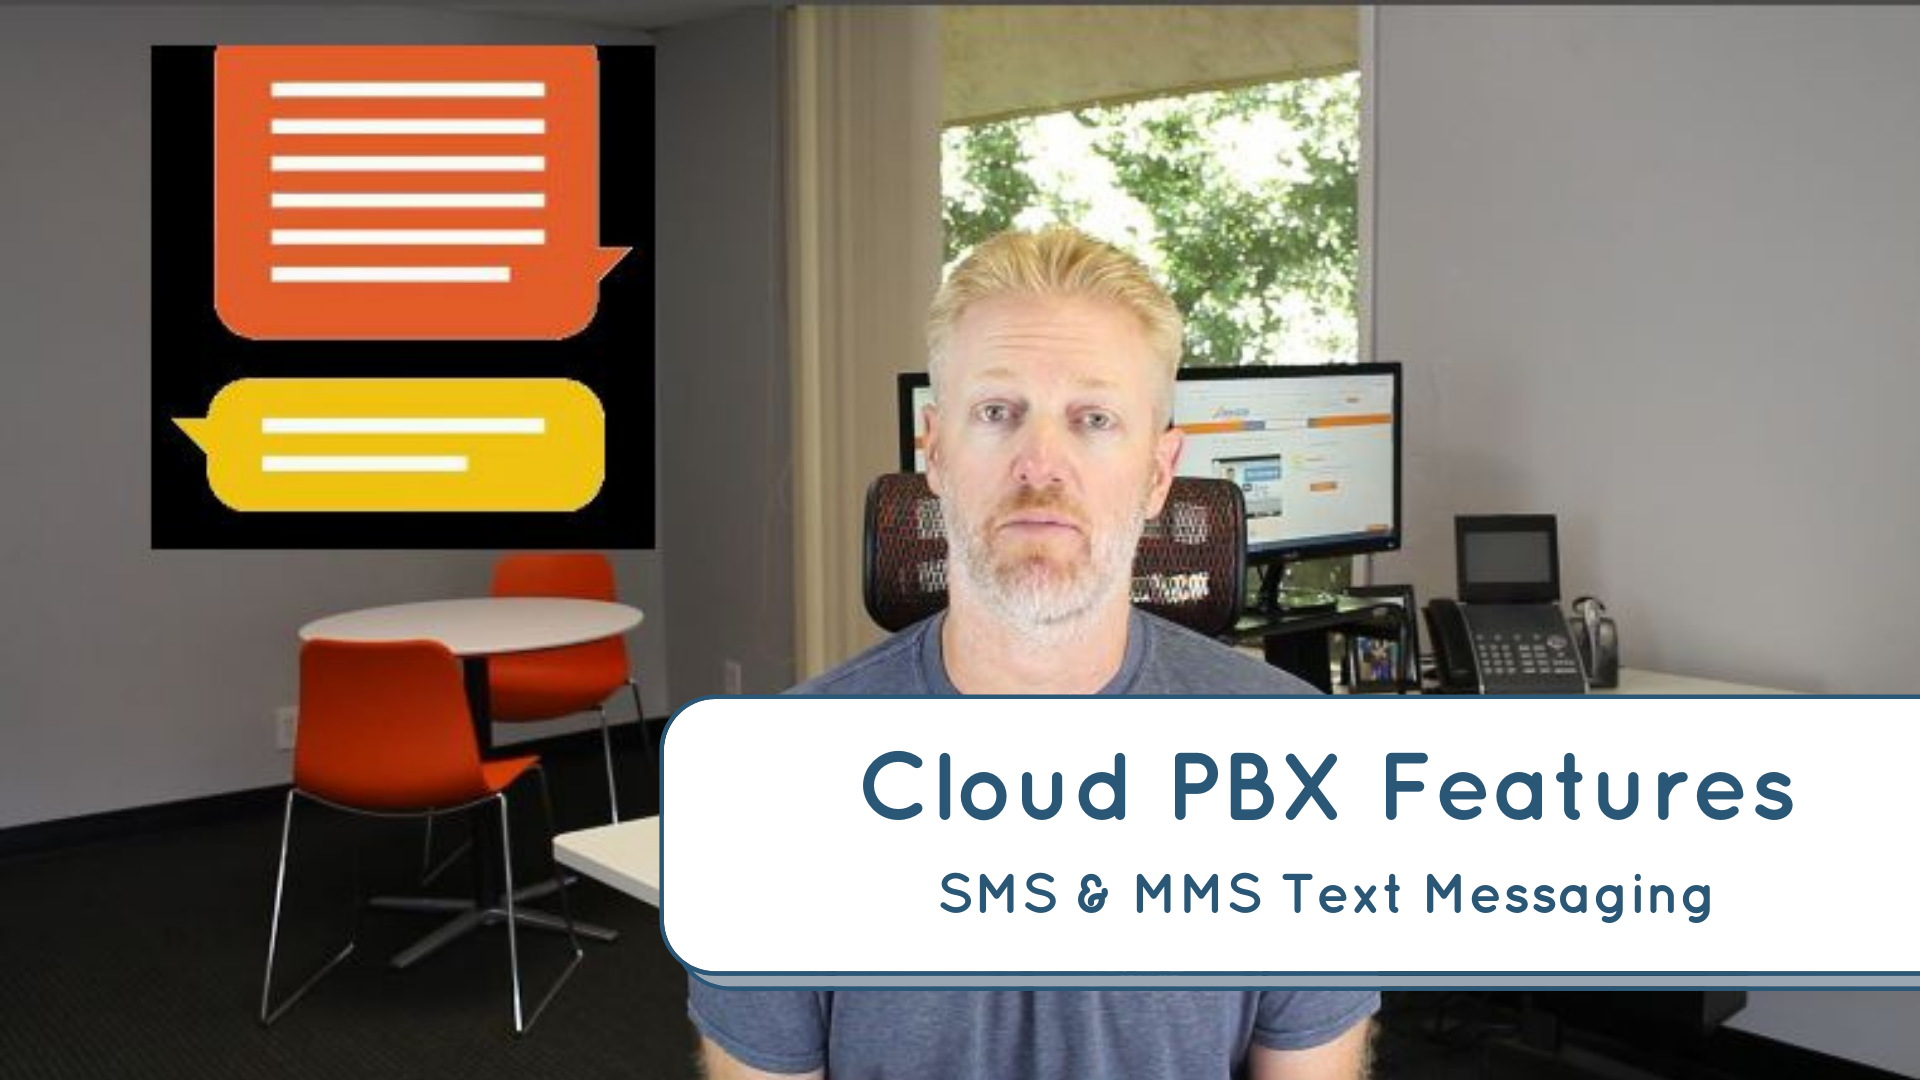 Cloud PBX Features - SMS & MMS Text Messaging